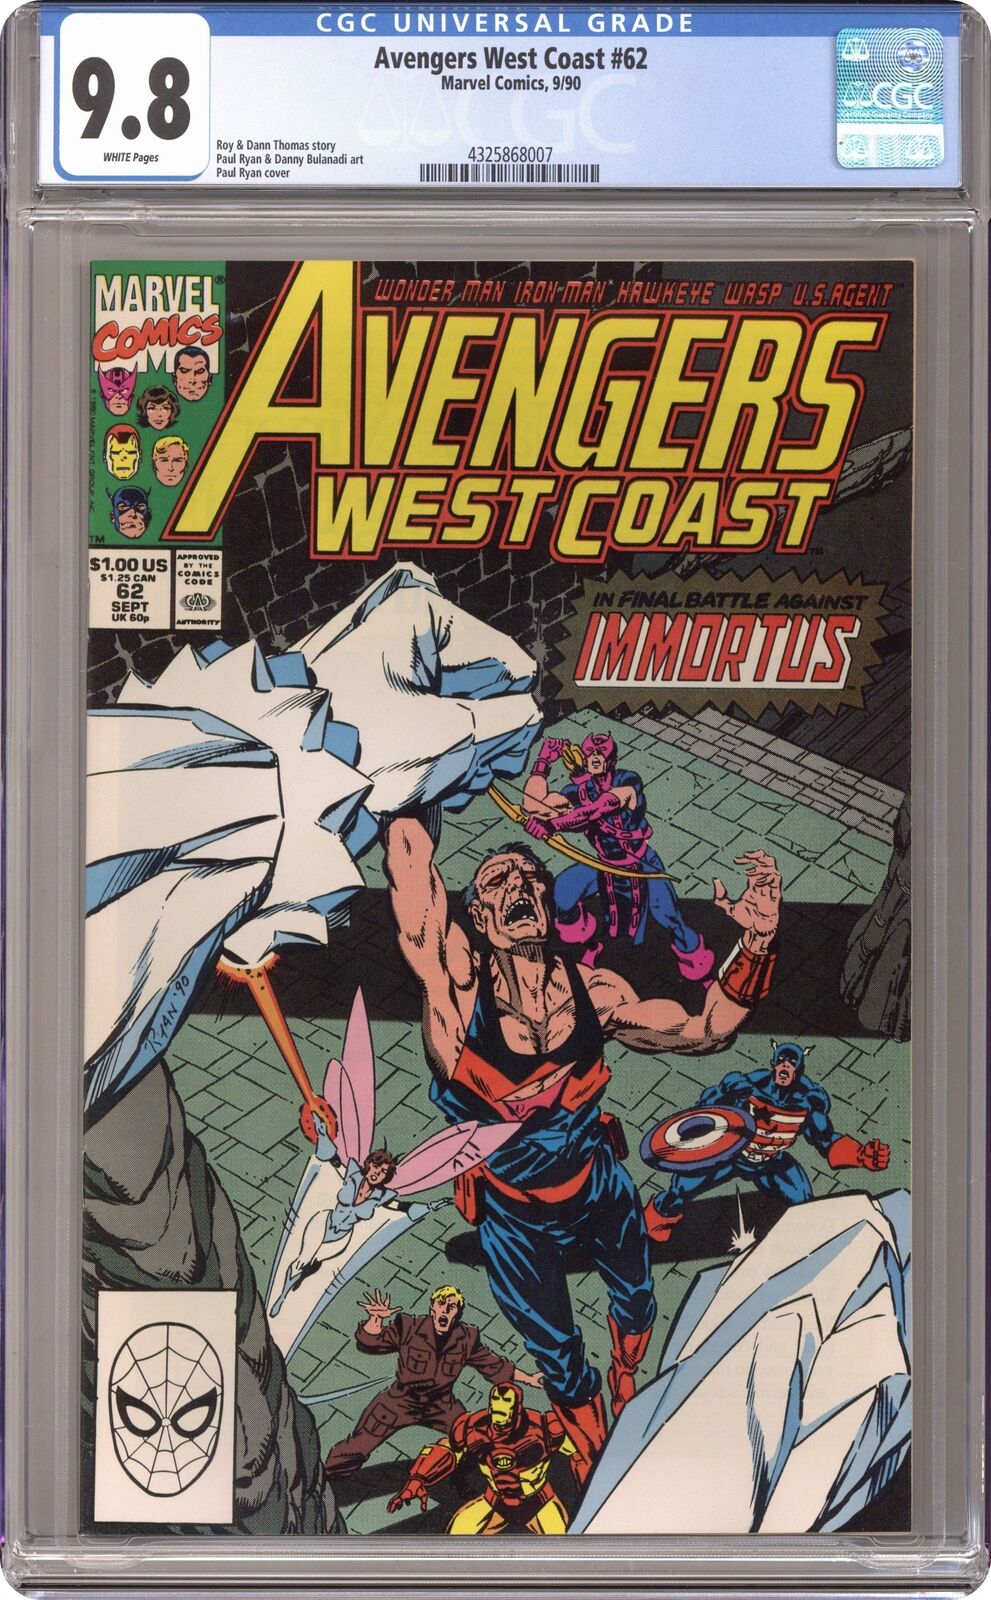 Avengers West Coast #62 CGC 9.8 1990 4325868007